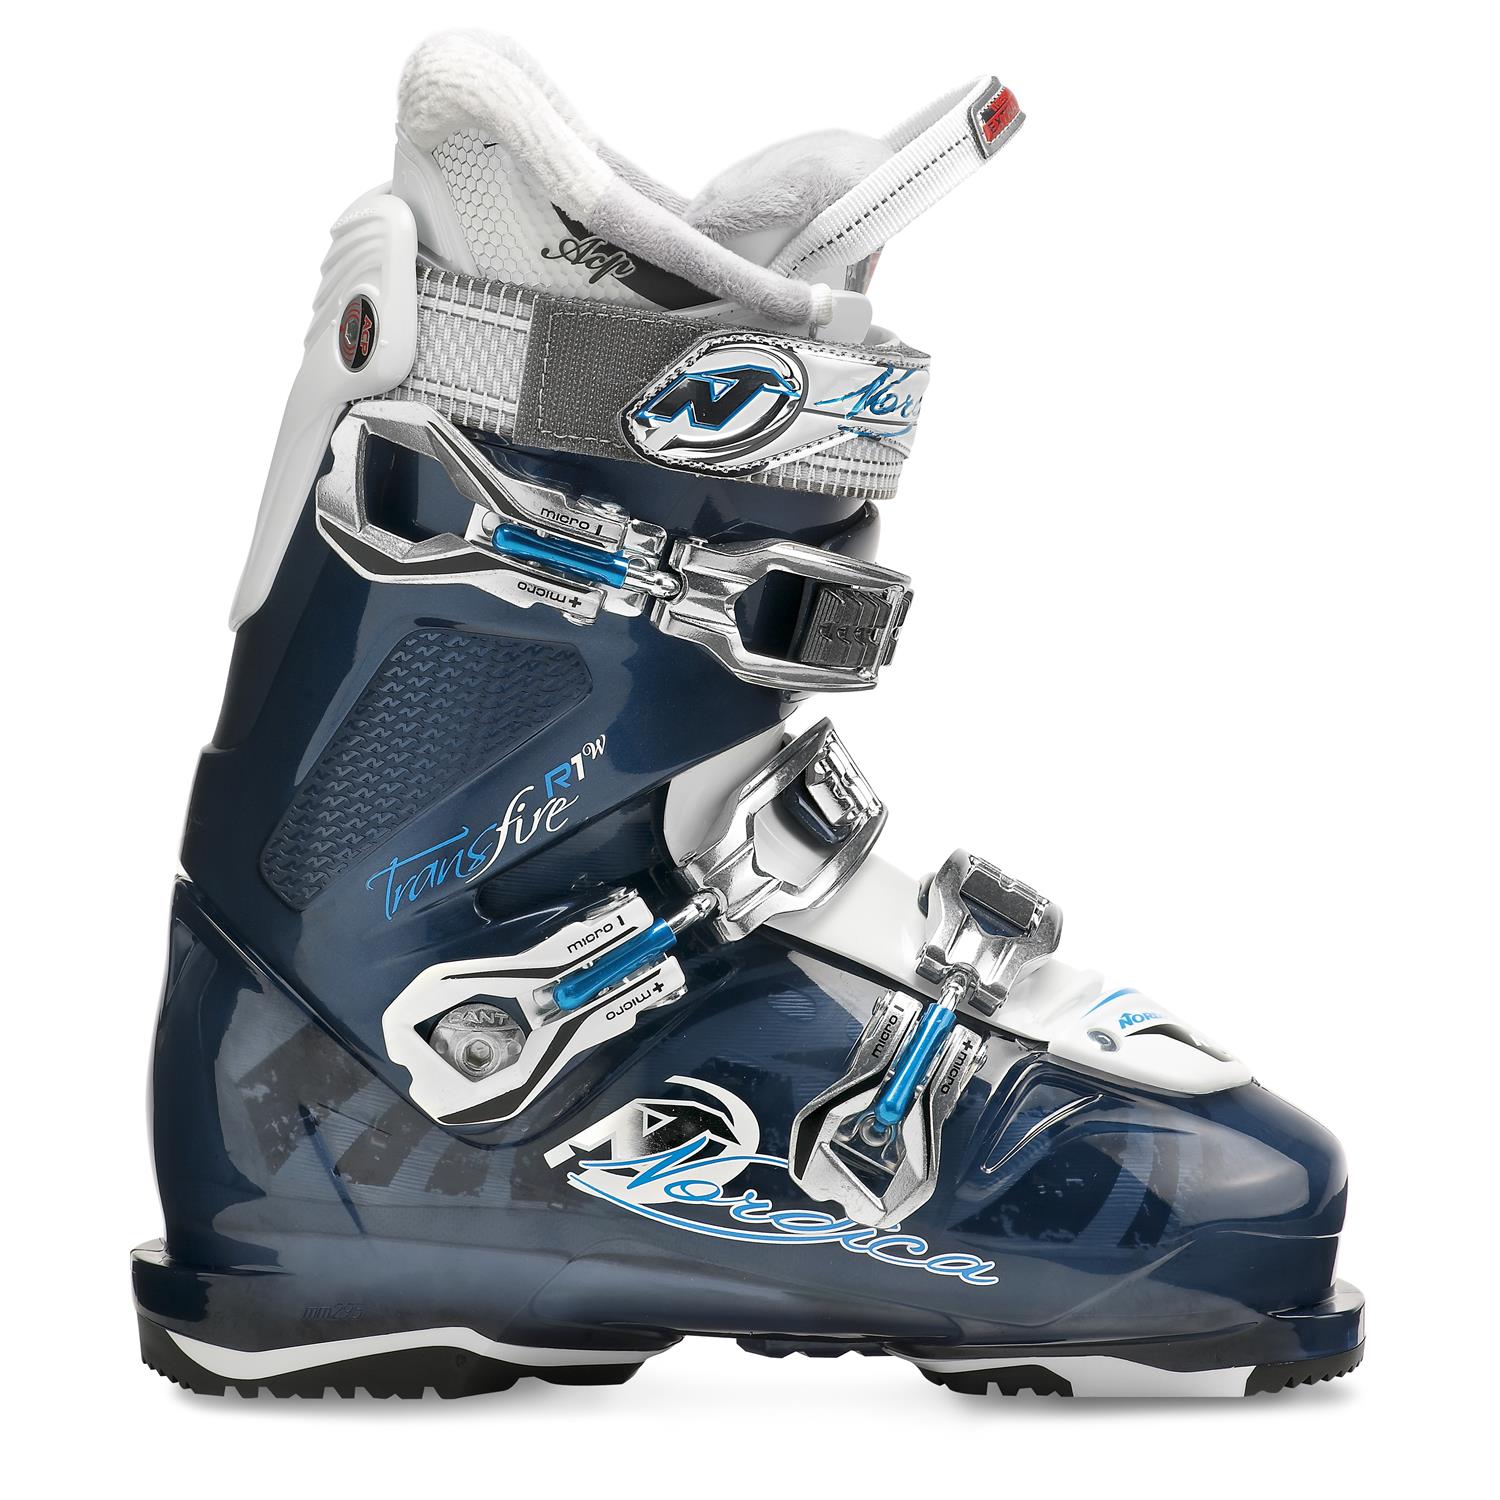 Nordica Transfire R1 Ski Boots - Women's 2014 | evo outlet